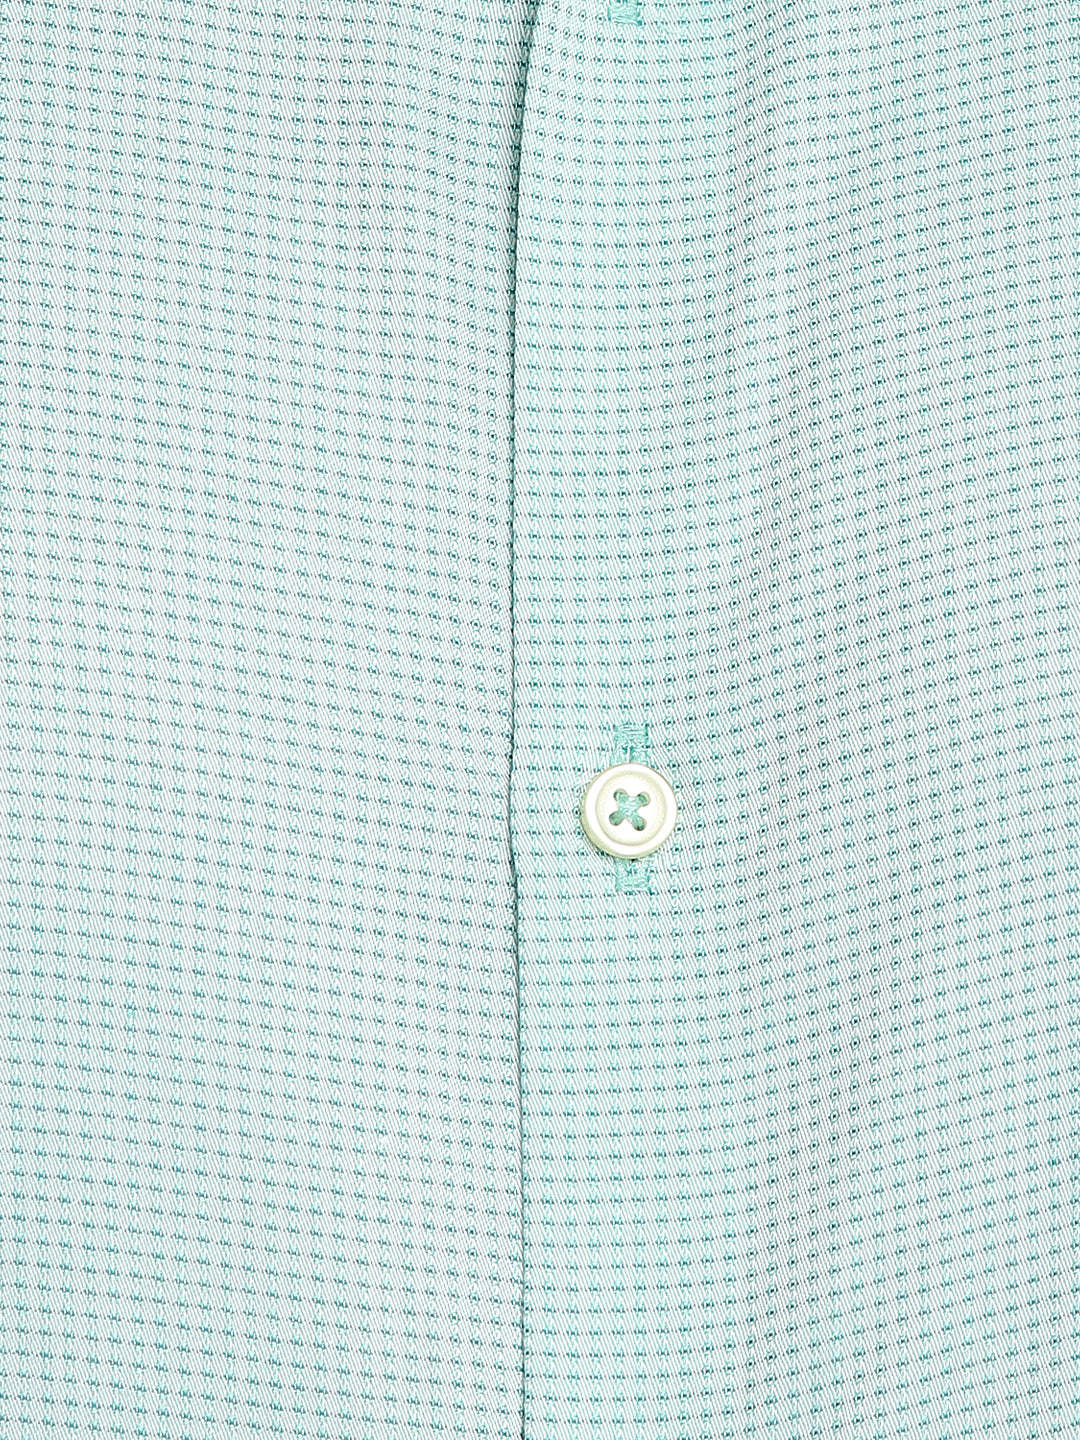 Cotton Sky Blue Self Design Slim Fit Formal Shirt